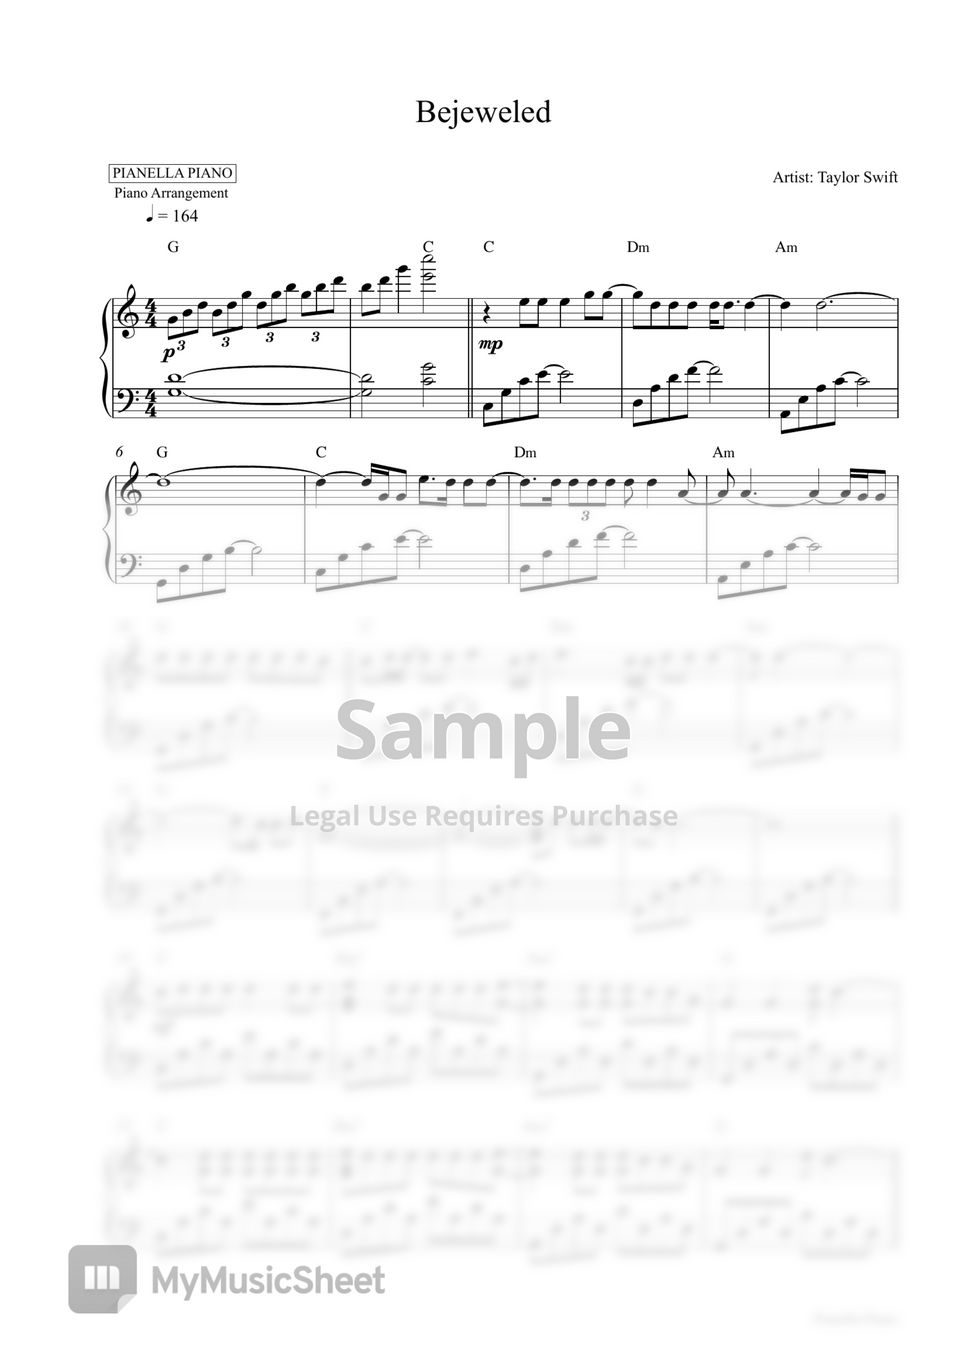 Taylor Swift - Bejeweled (Piano Sheet) by Pianella Piano